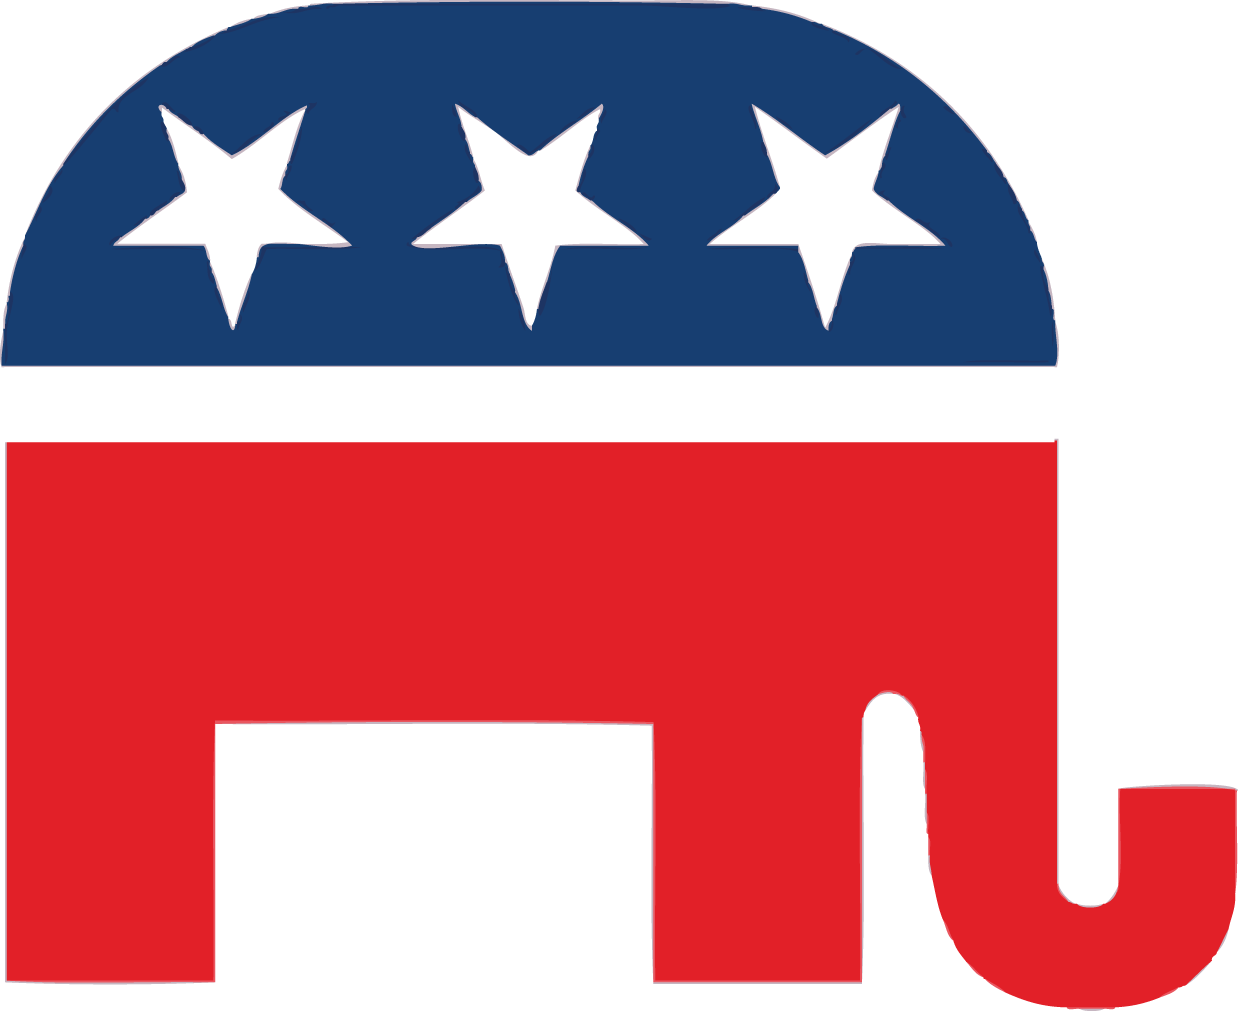 Elephant Republican Party